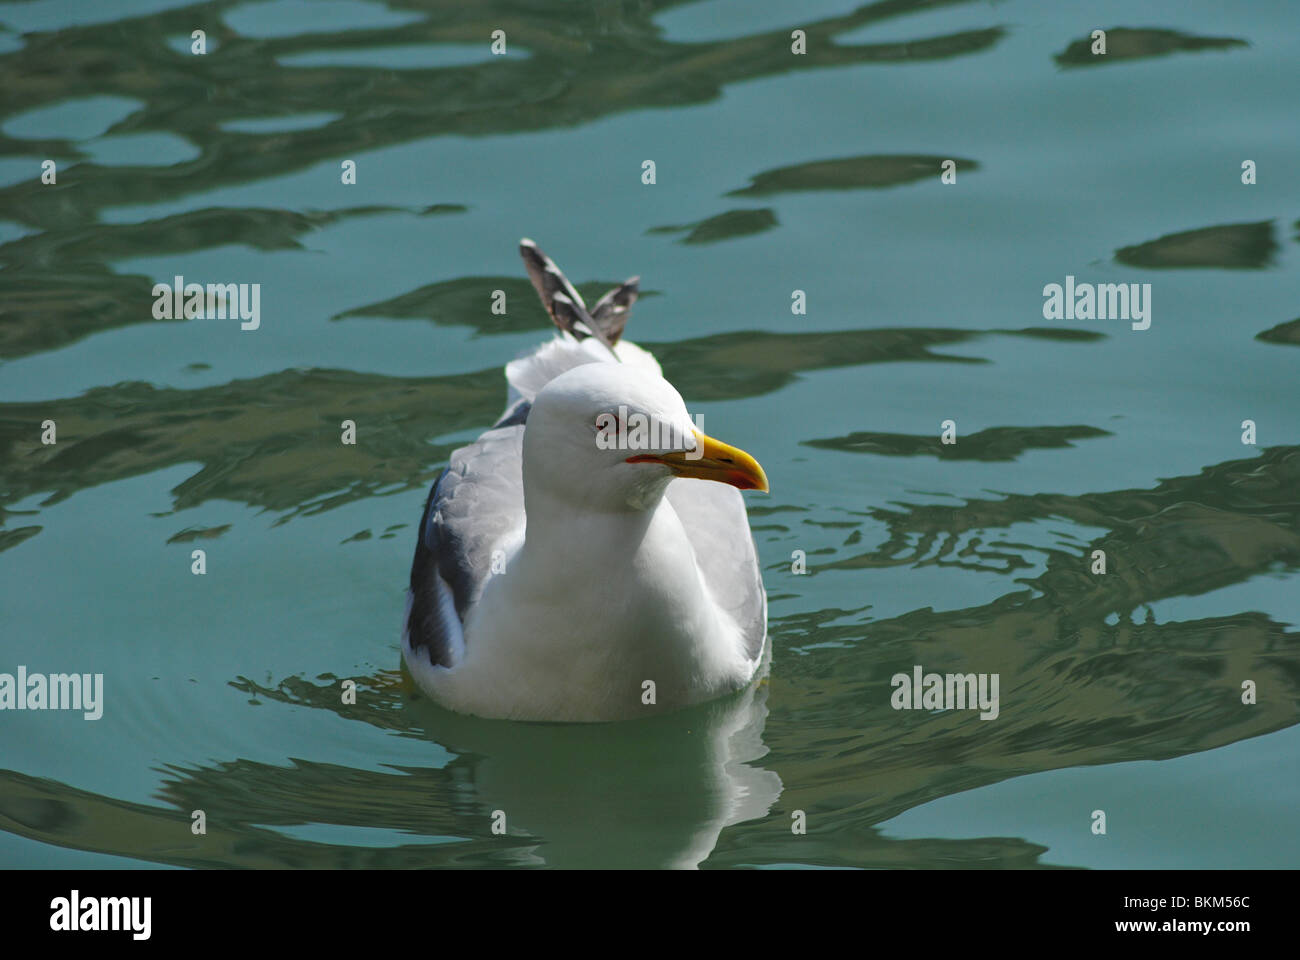 Seagull (aringa gabbiano), Venezia, Italia Foto Stock